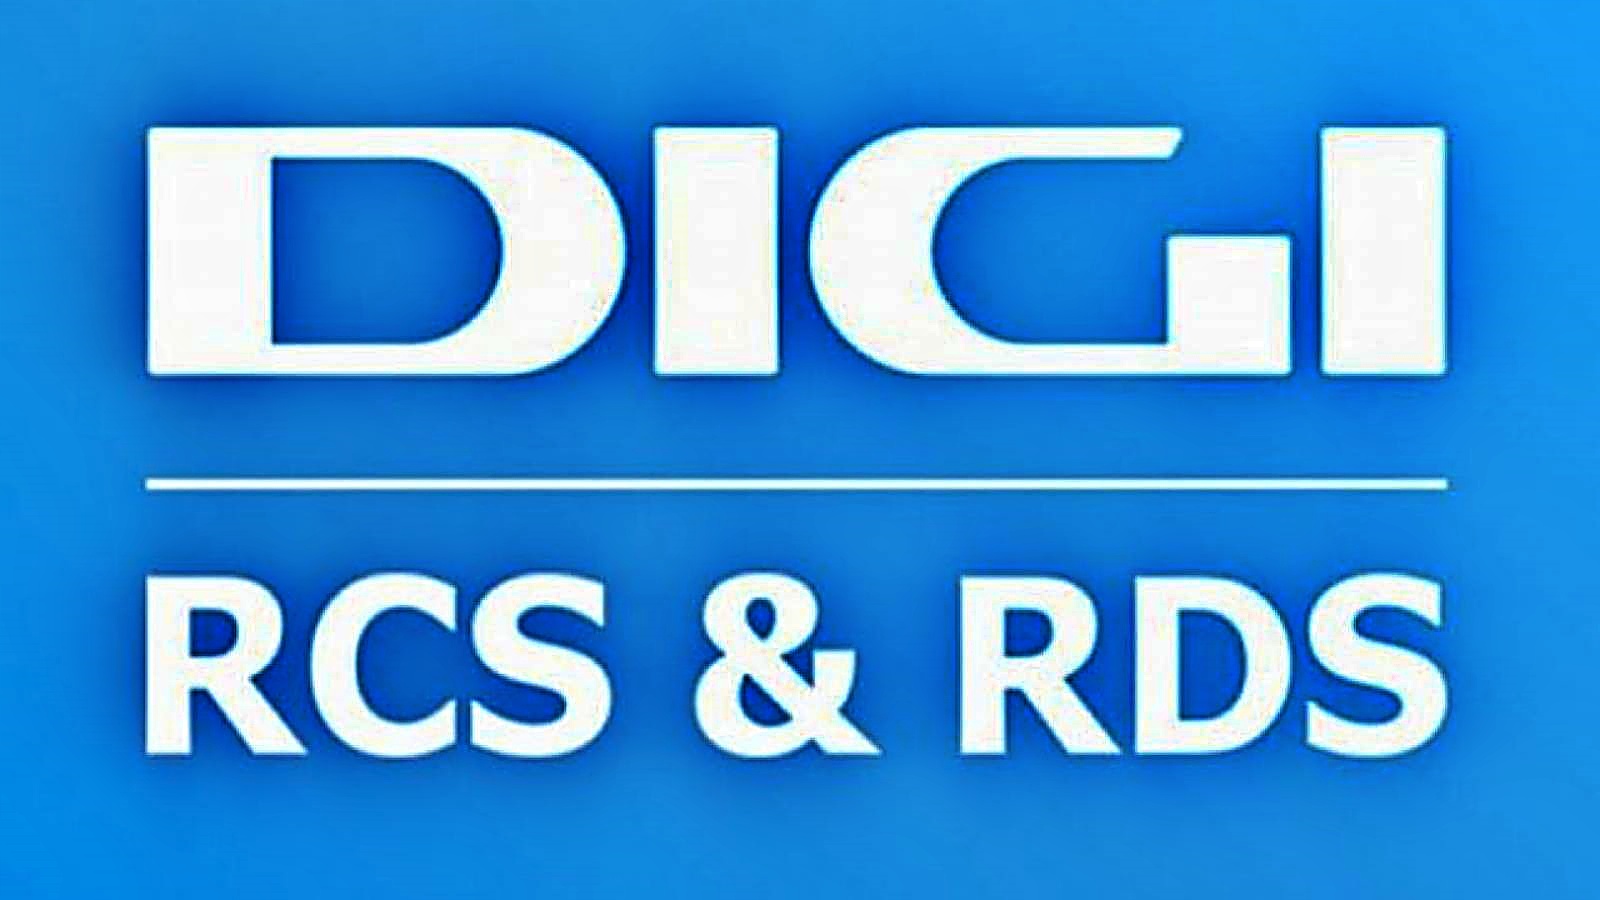 RCS & RDS Anunt Oficial Reducerile BLACK FRIDAY